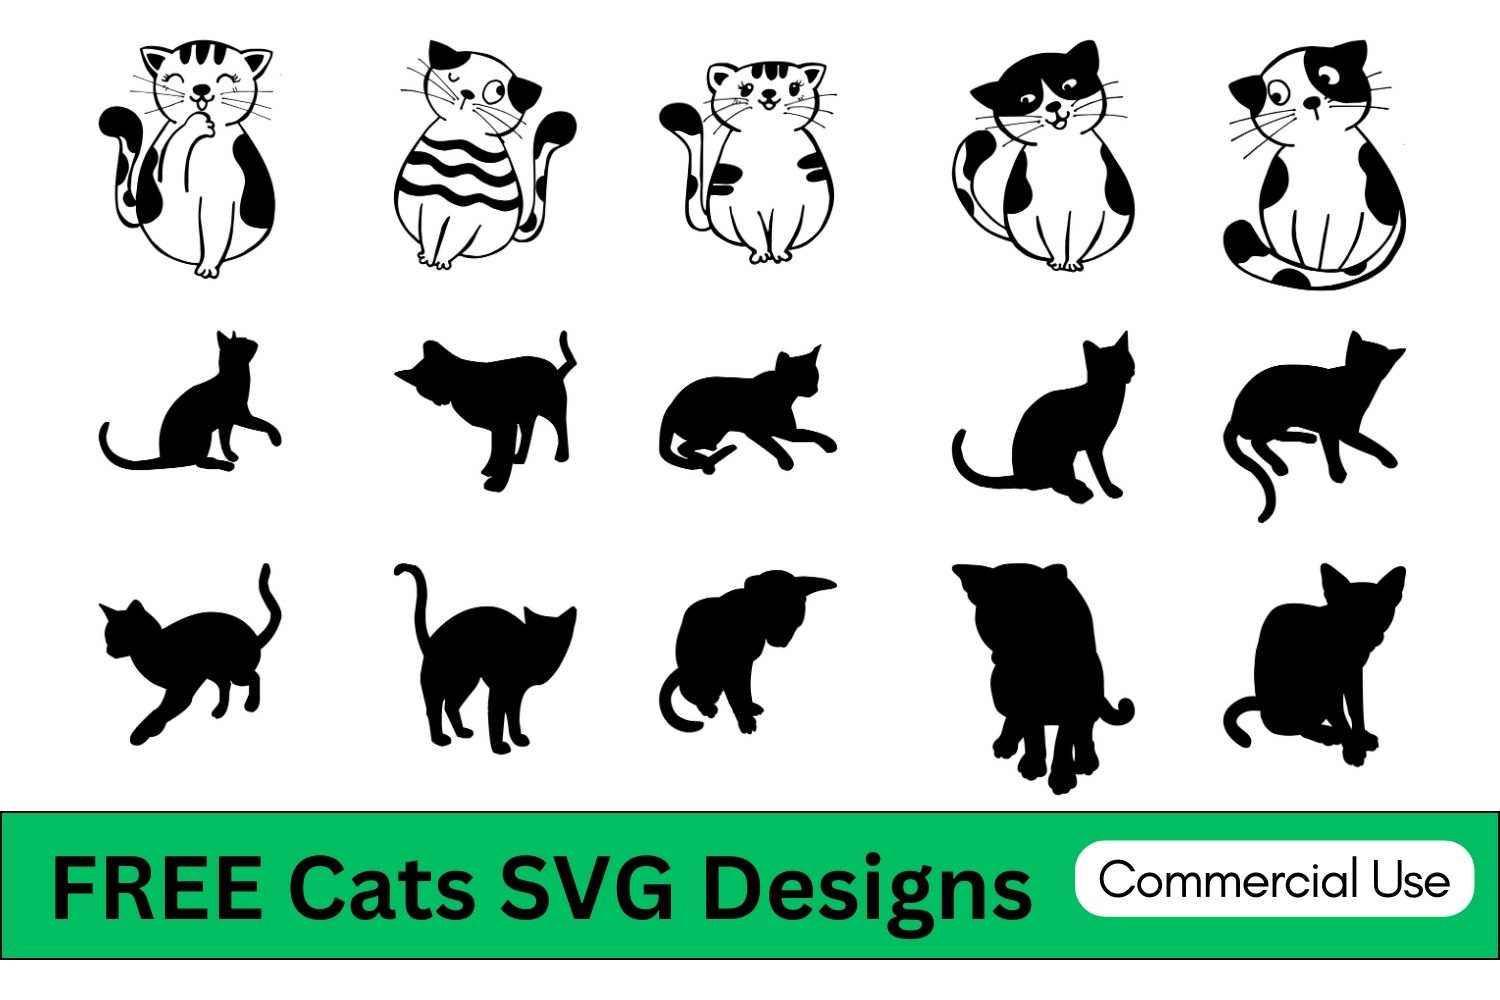 Cat Templates, Cats, Cat silhouette, prinatbles, stencils, vector, cricut, download, svg, clipart, designs, cat, free, download